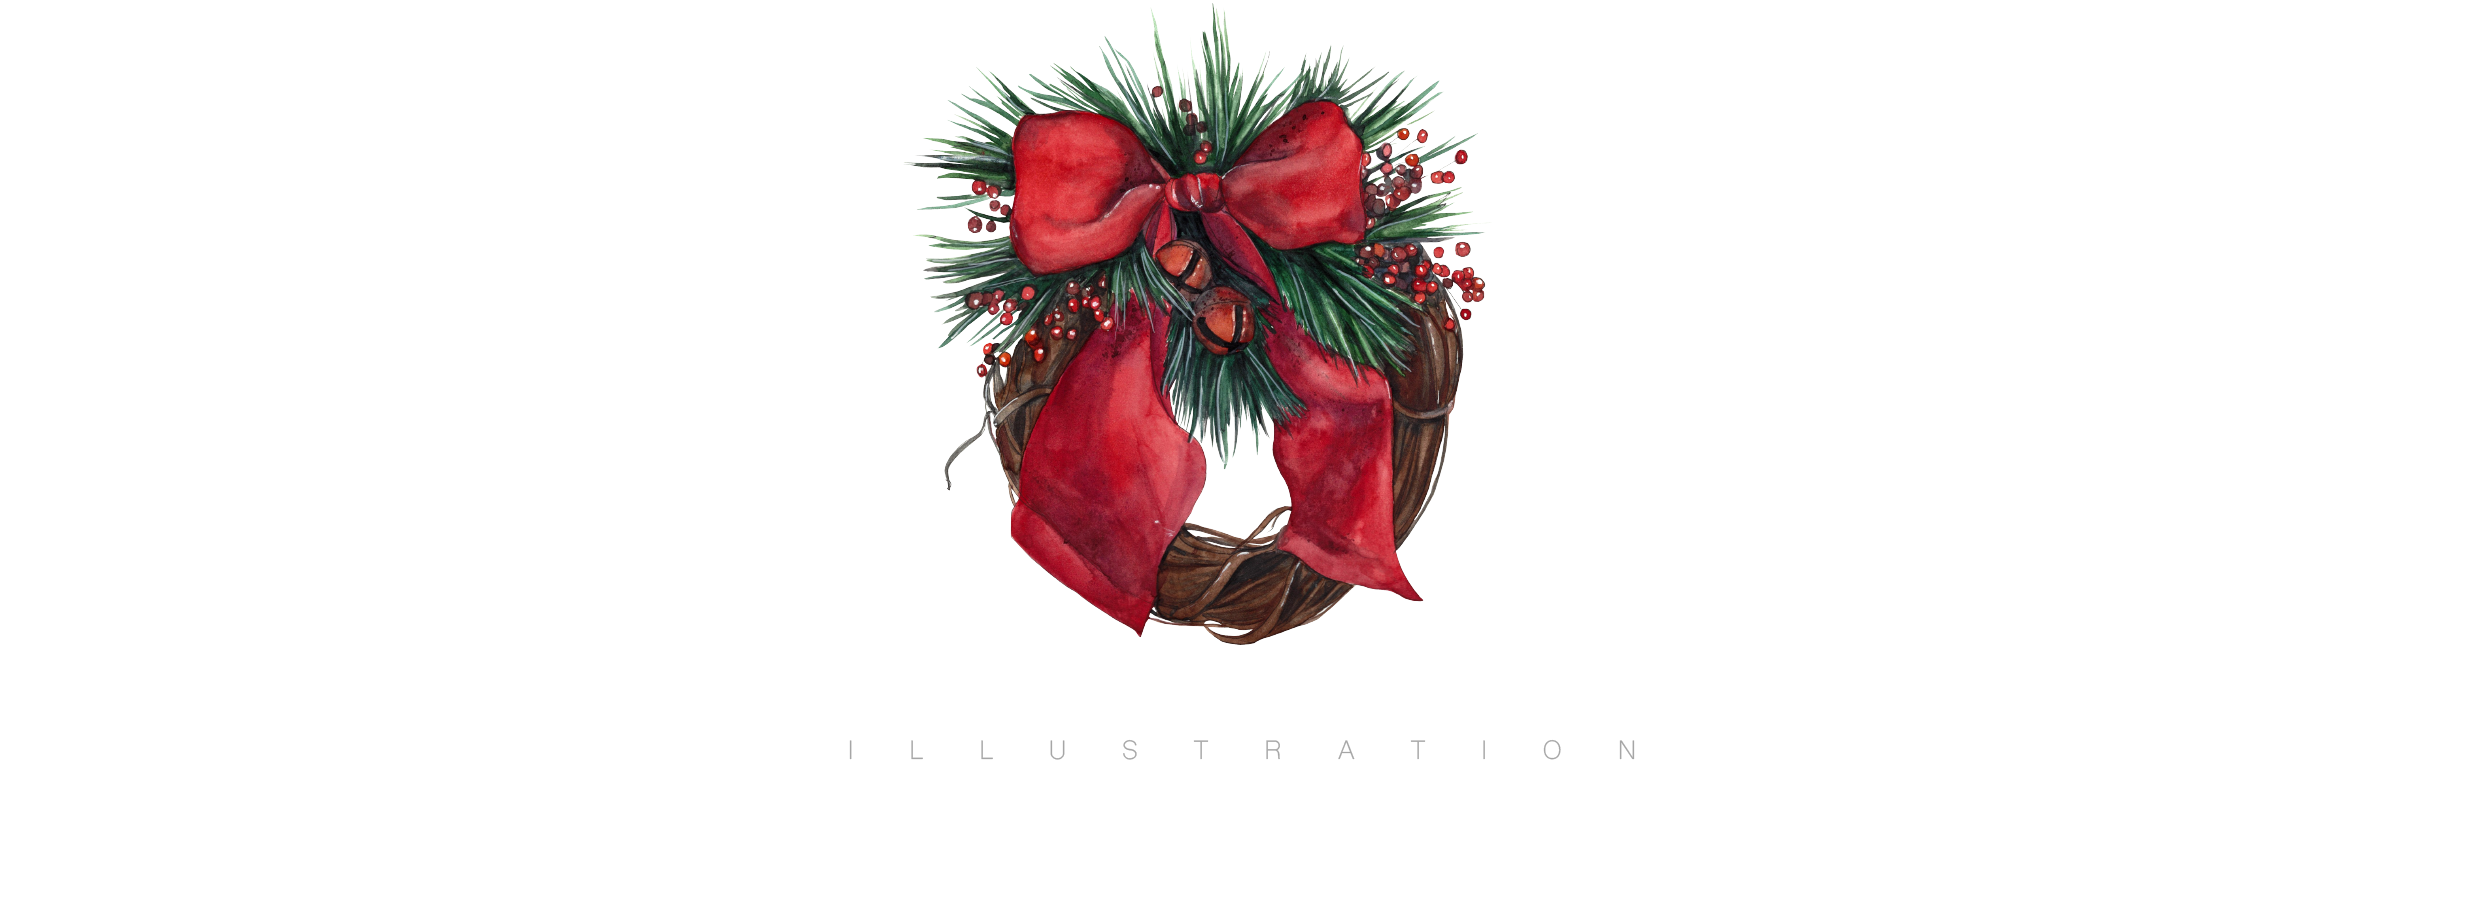 Kseniia_Eroess_Illustration_Watercolour_Christmas_Slide-01